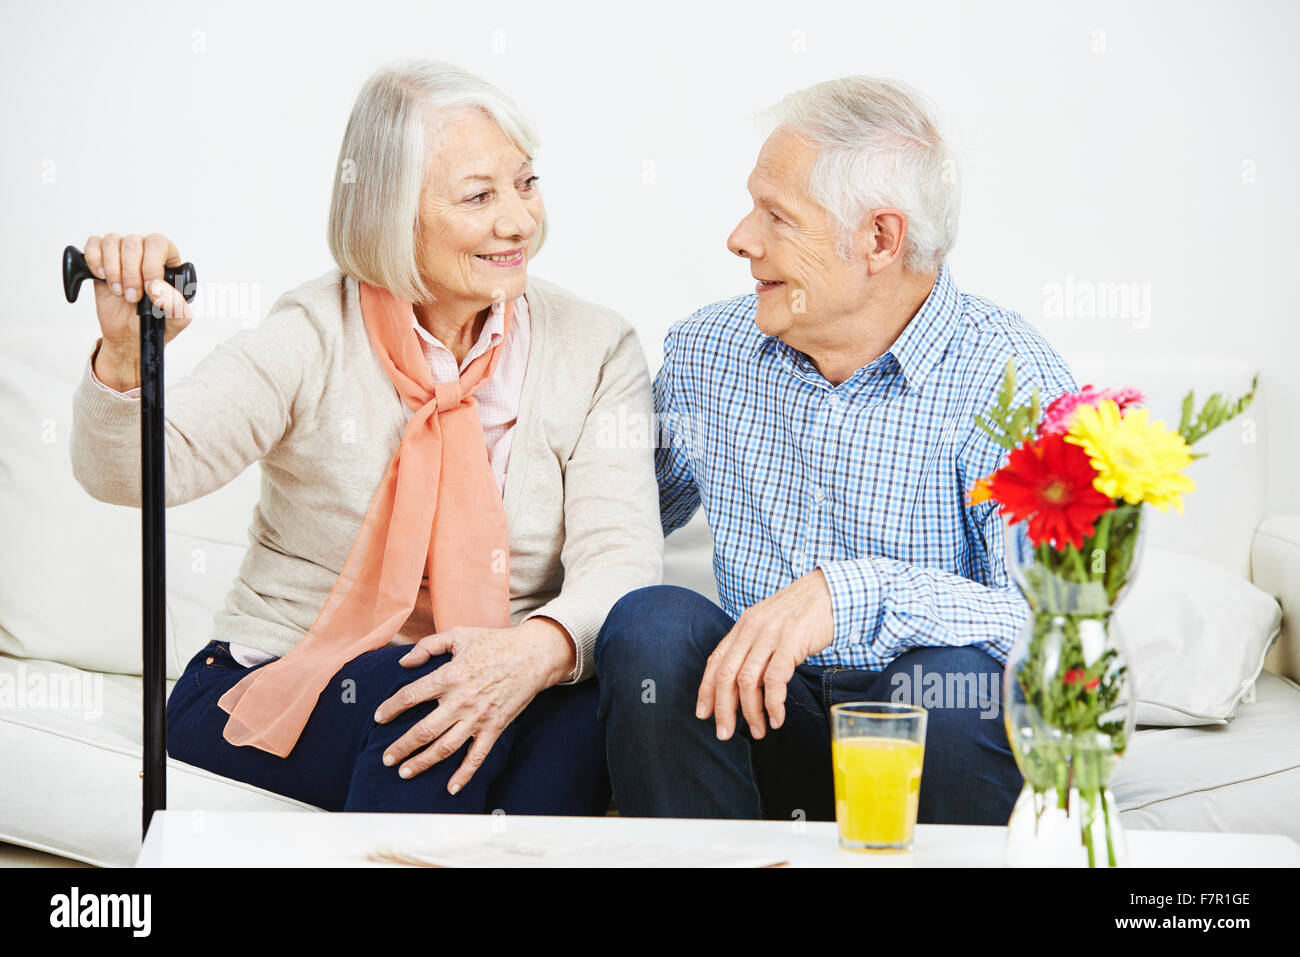 Communication between senior man and woman at home Stock Photo